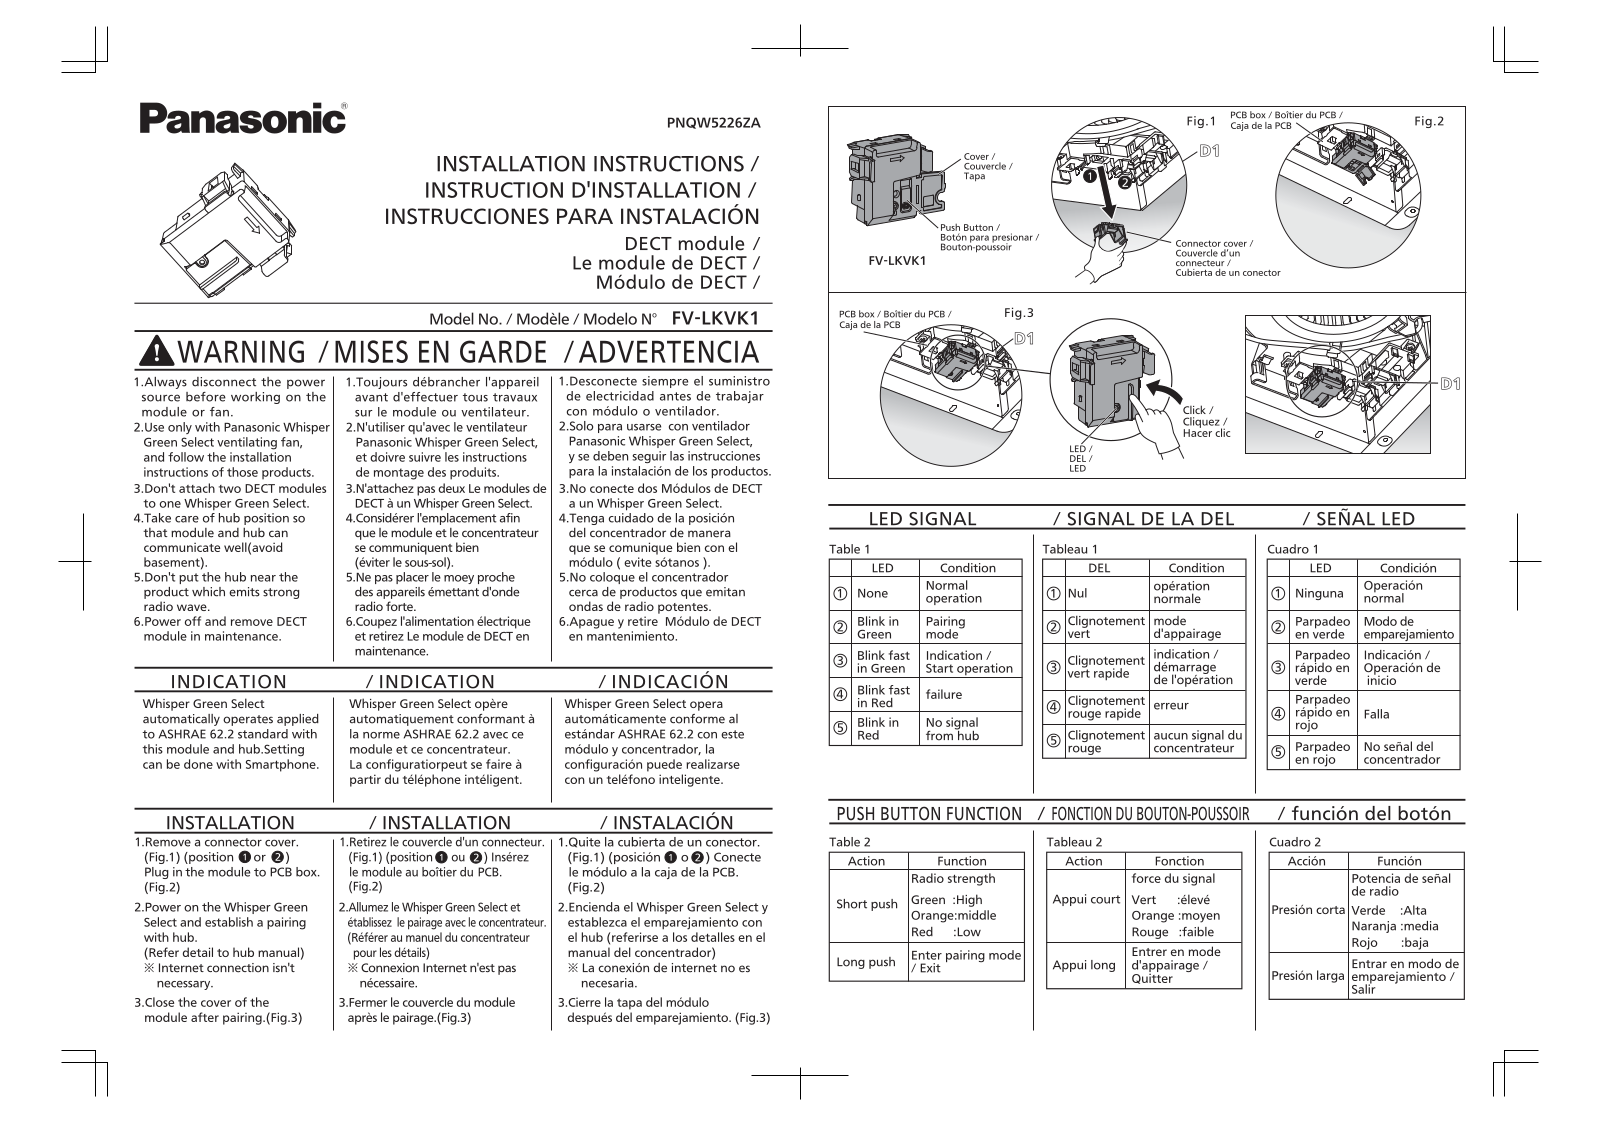 Panasonic of North America 96NFV LKVK1 User Manual